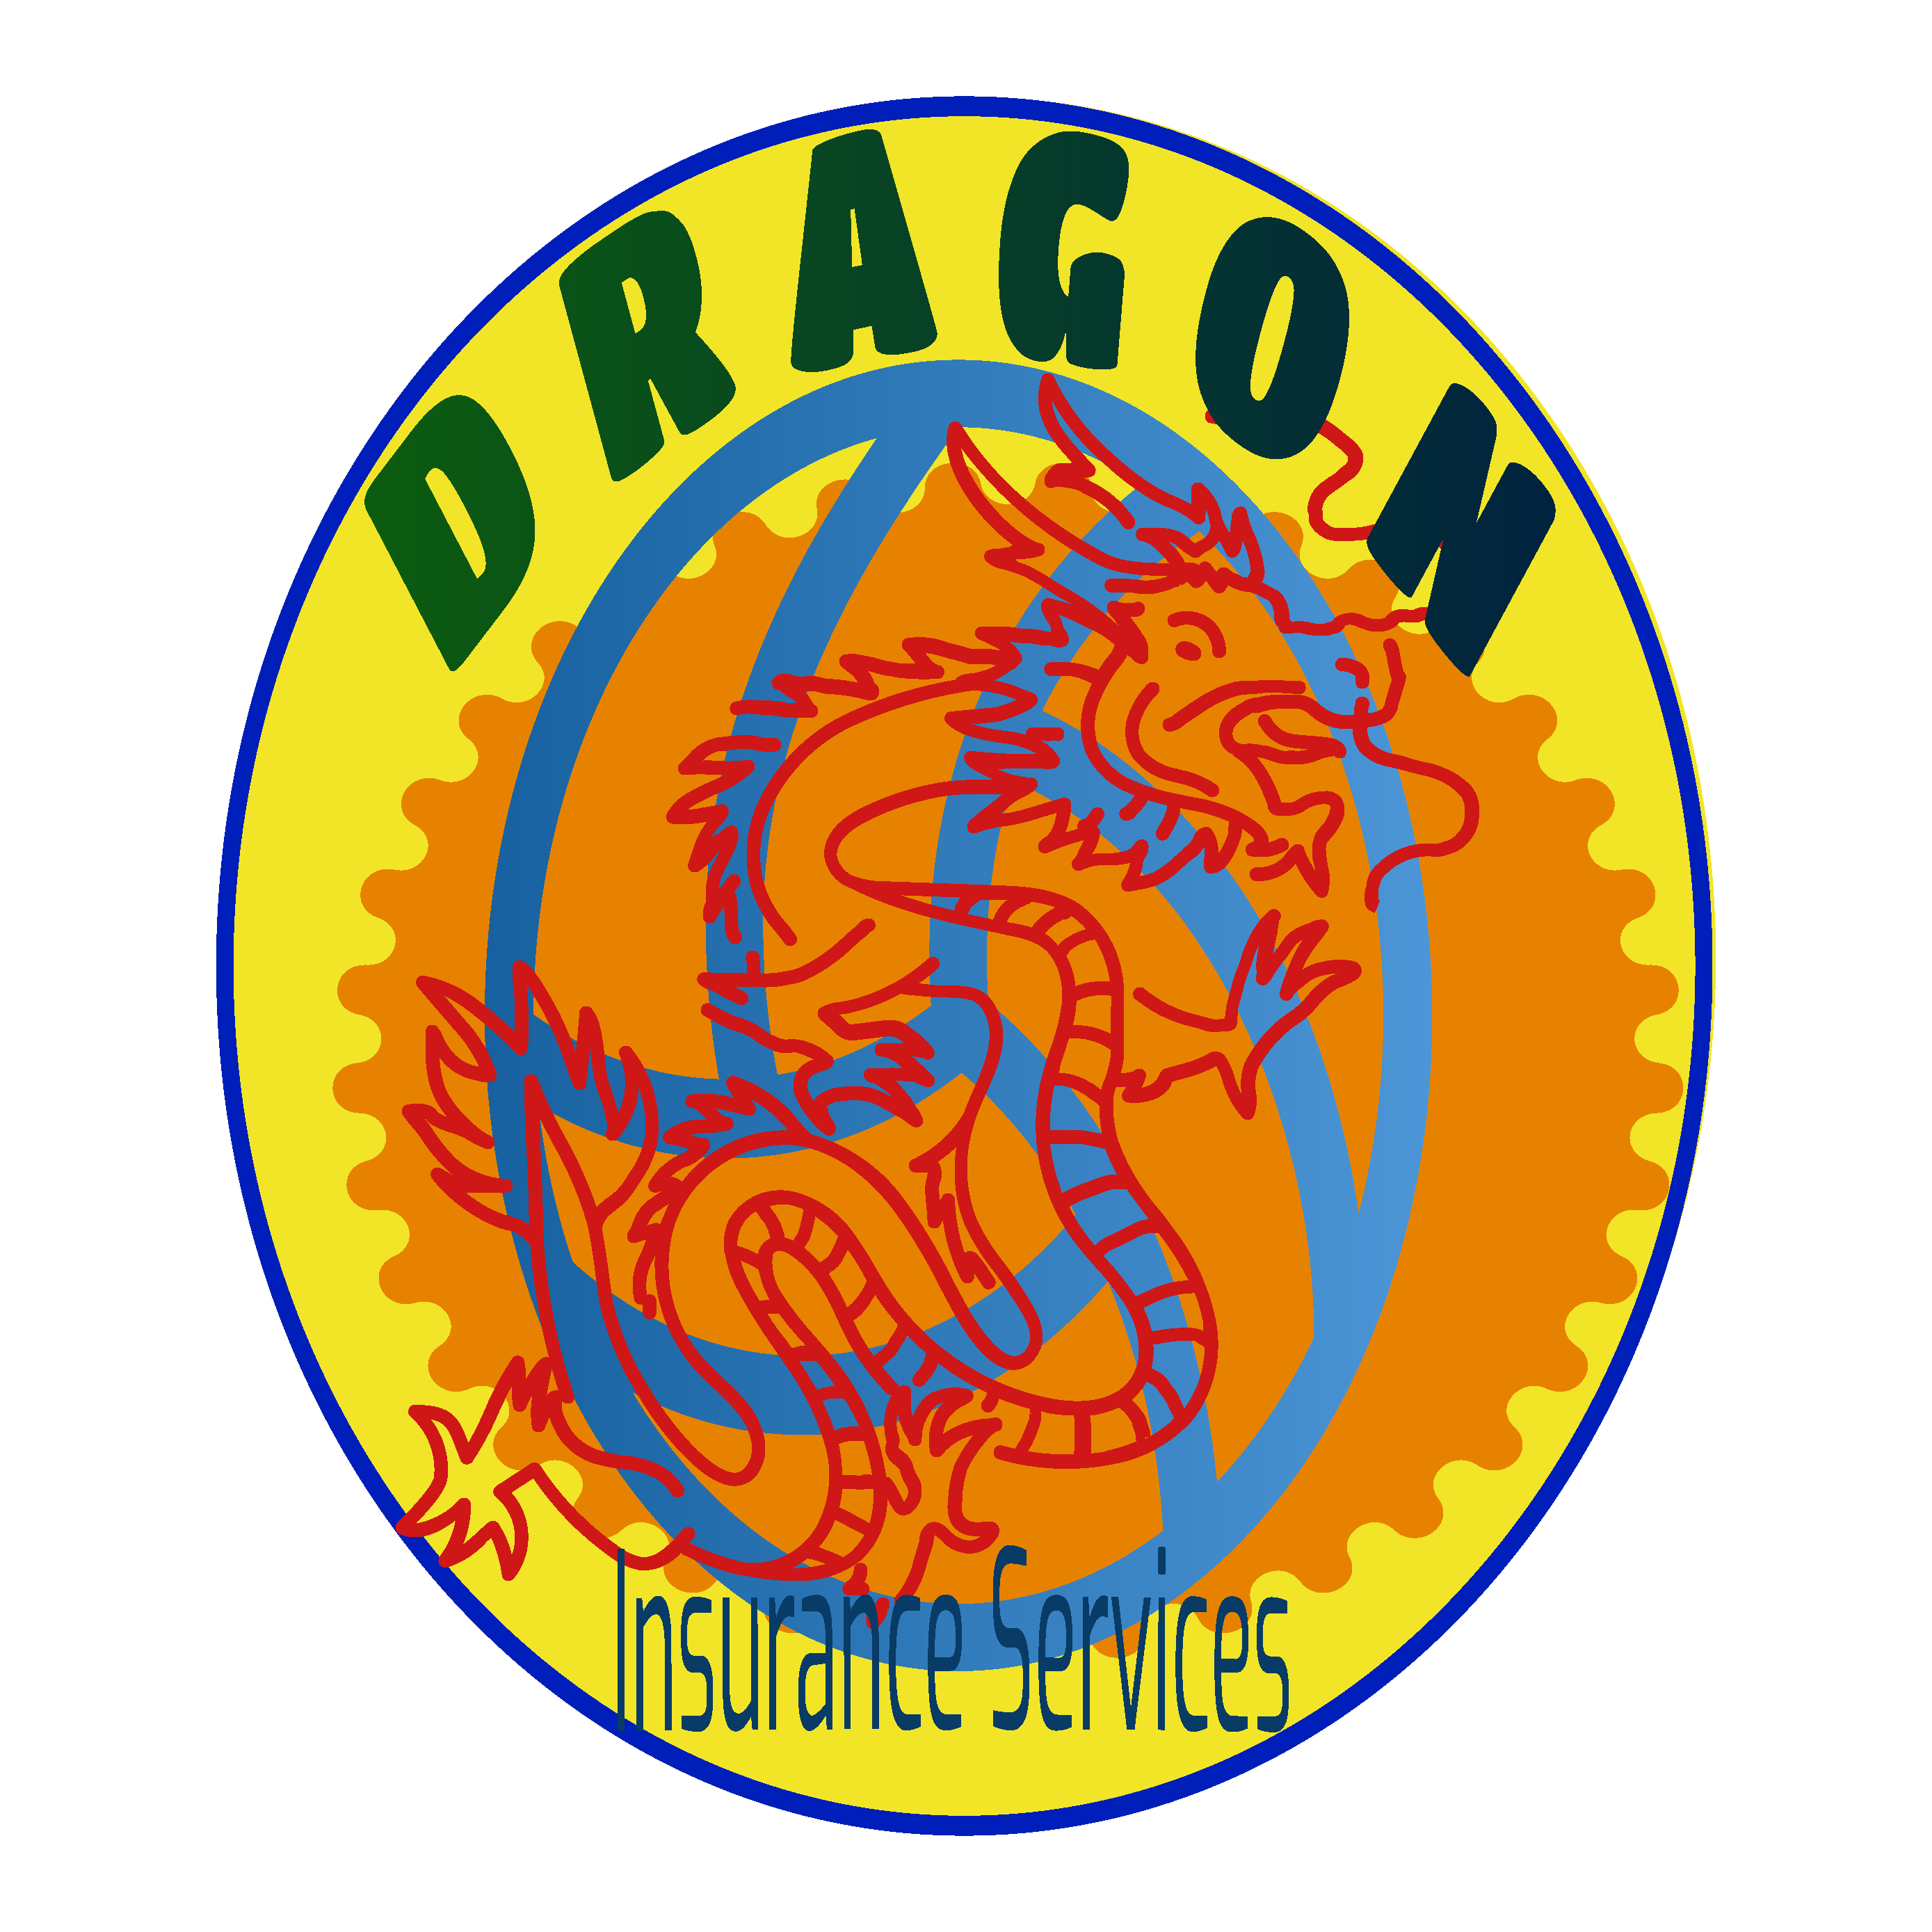 Dragon Insurance